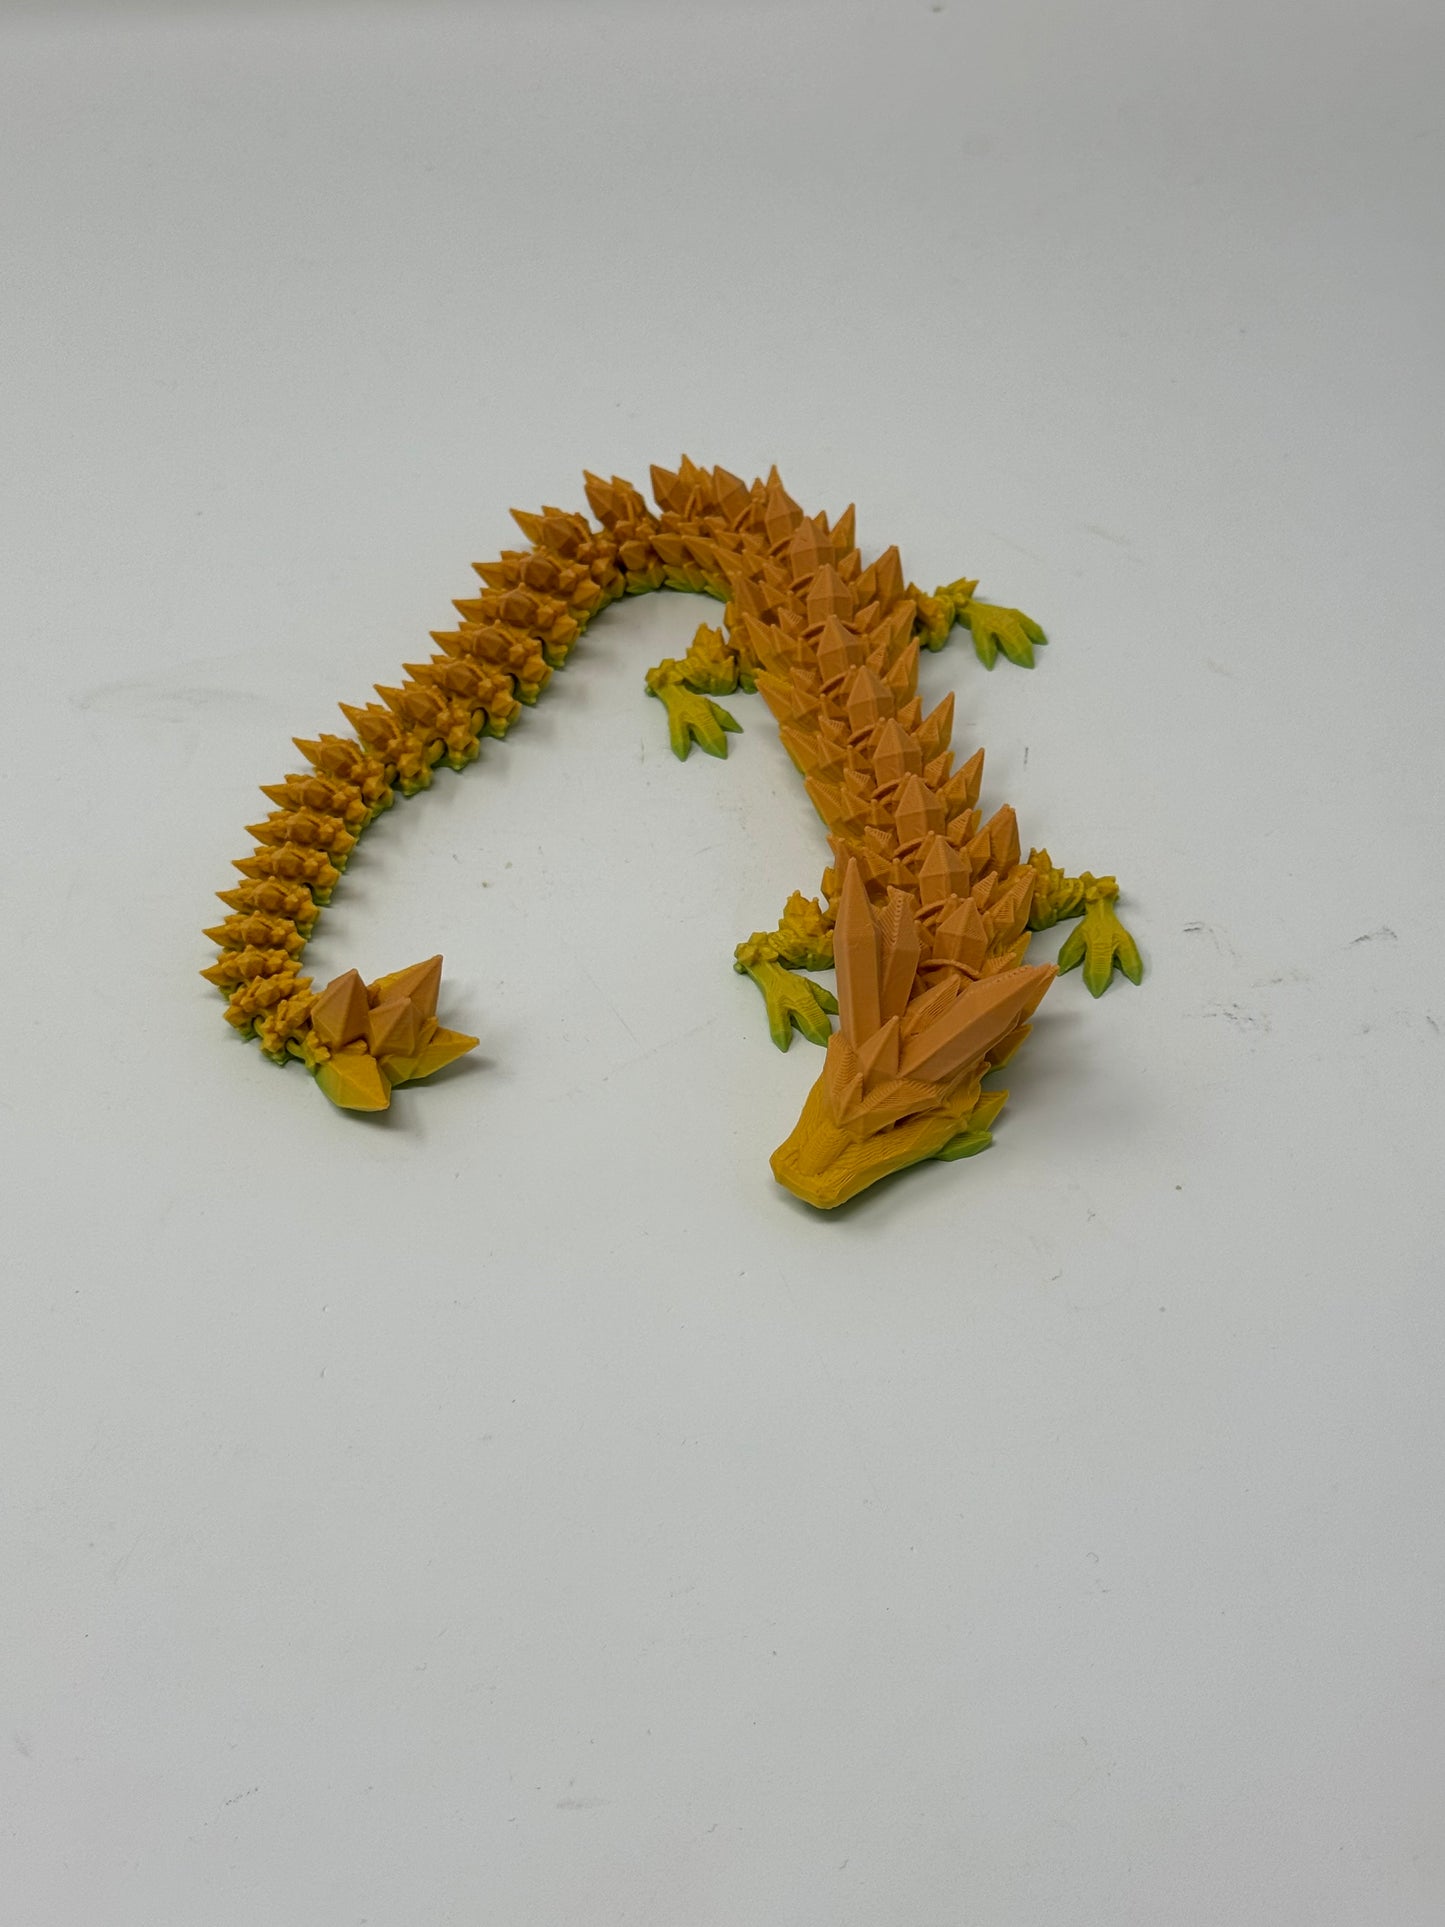 3D Printed Crystal Dragon (more colors)